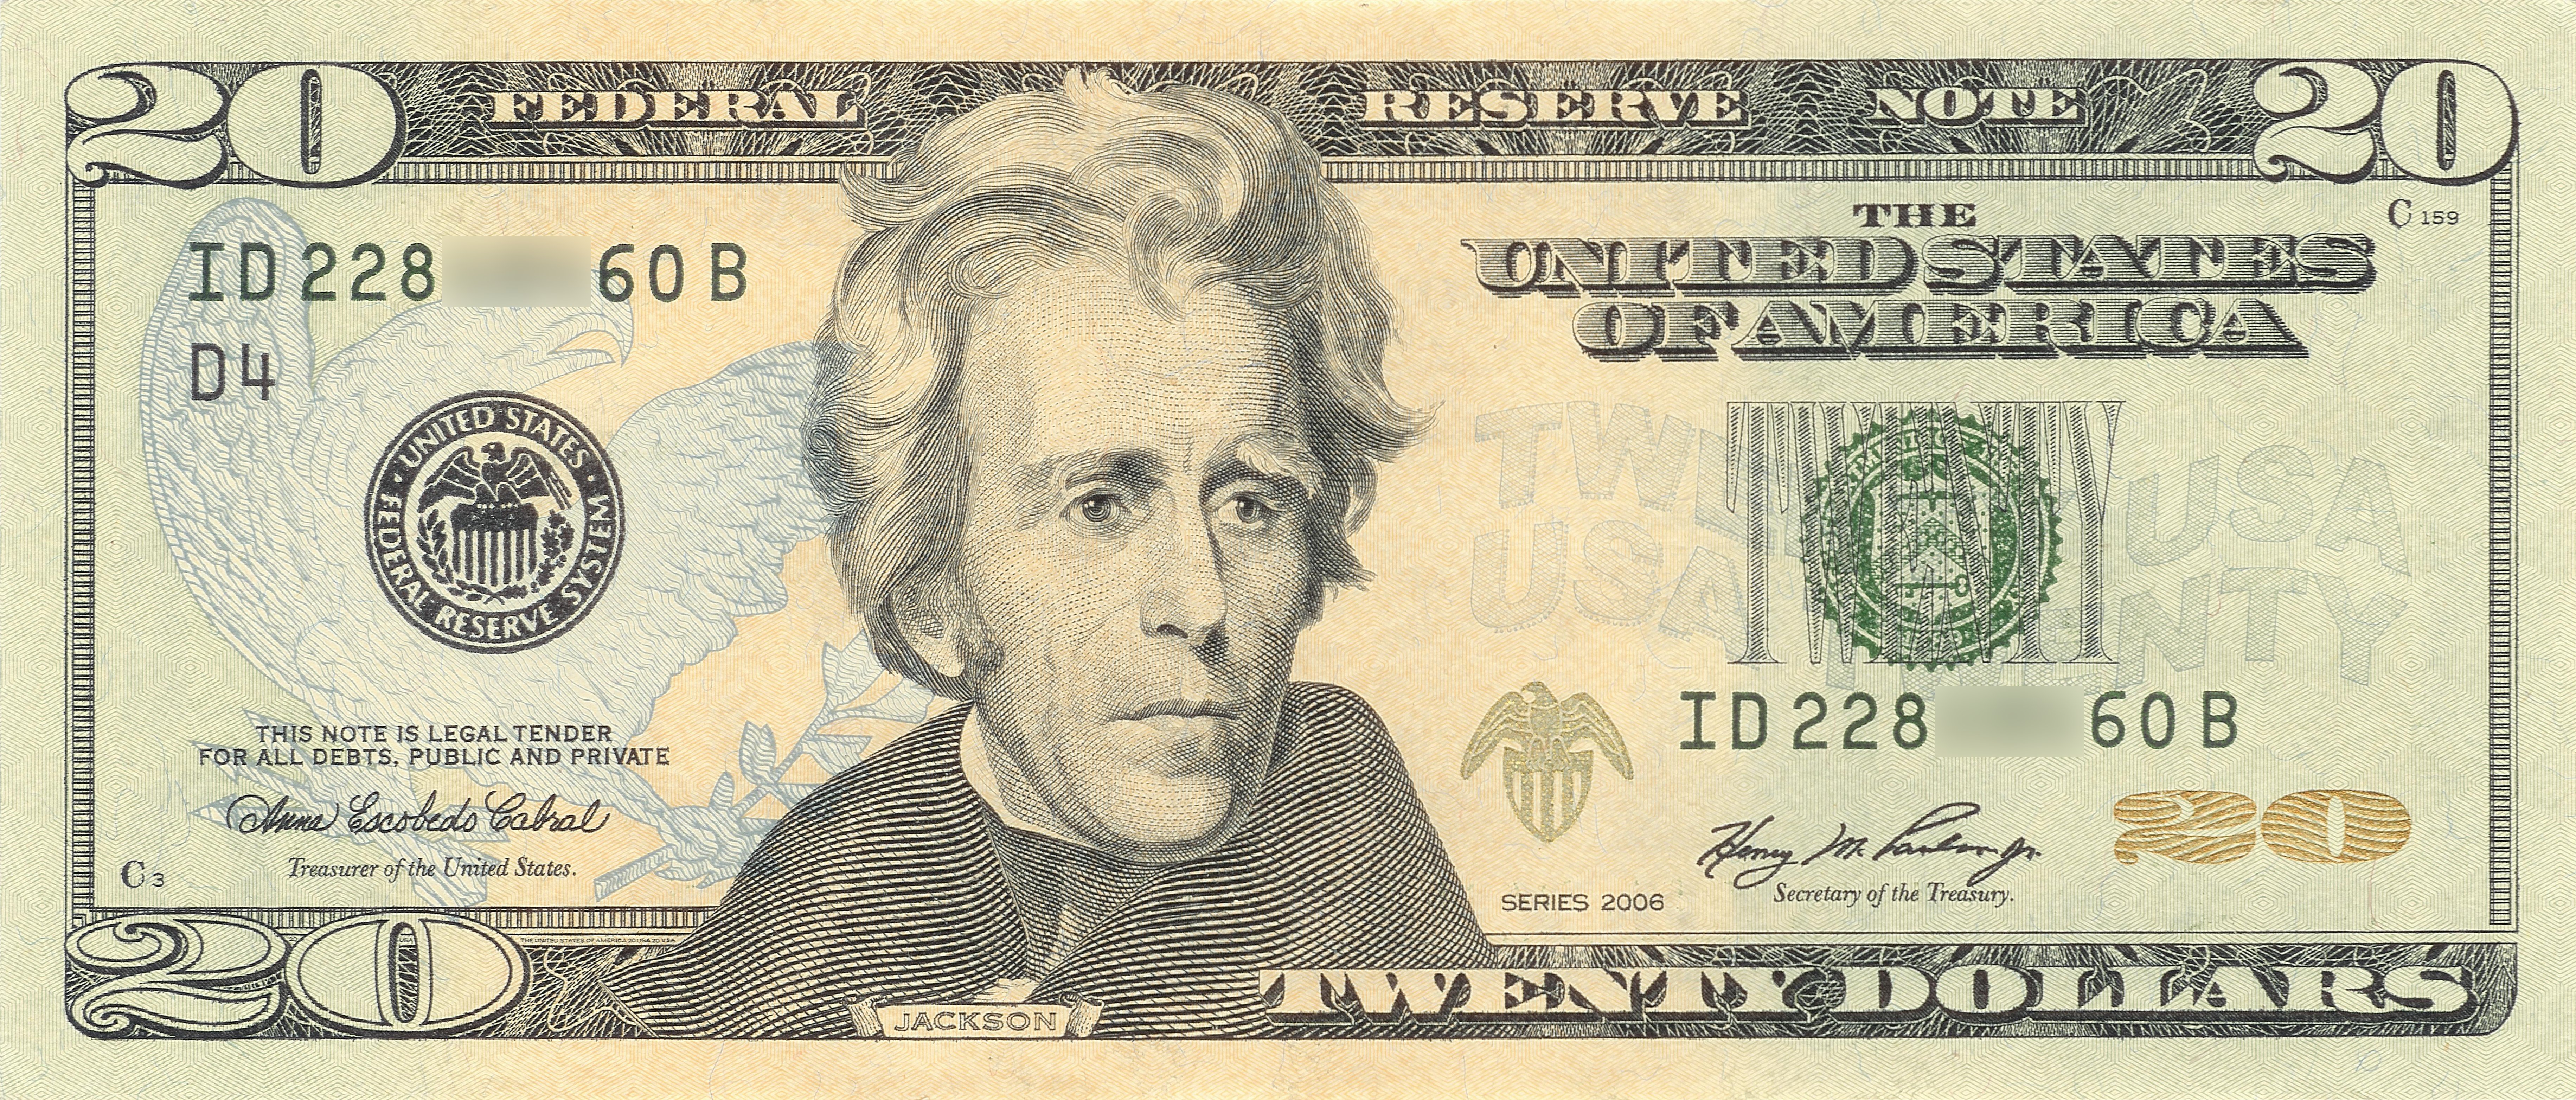 File:US $20 Series 2006 Obverse.jpg - Wikimedia Commons